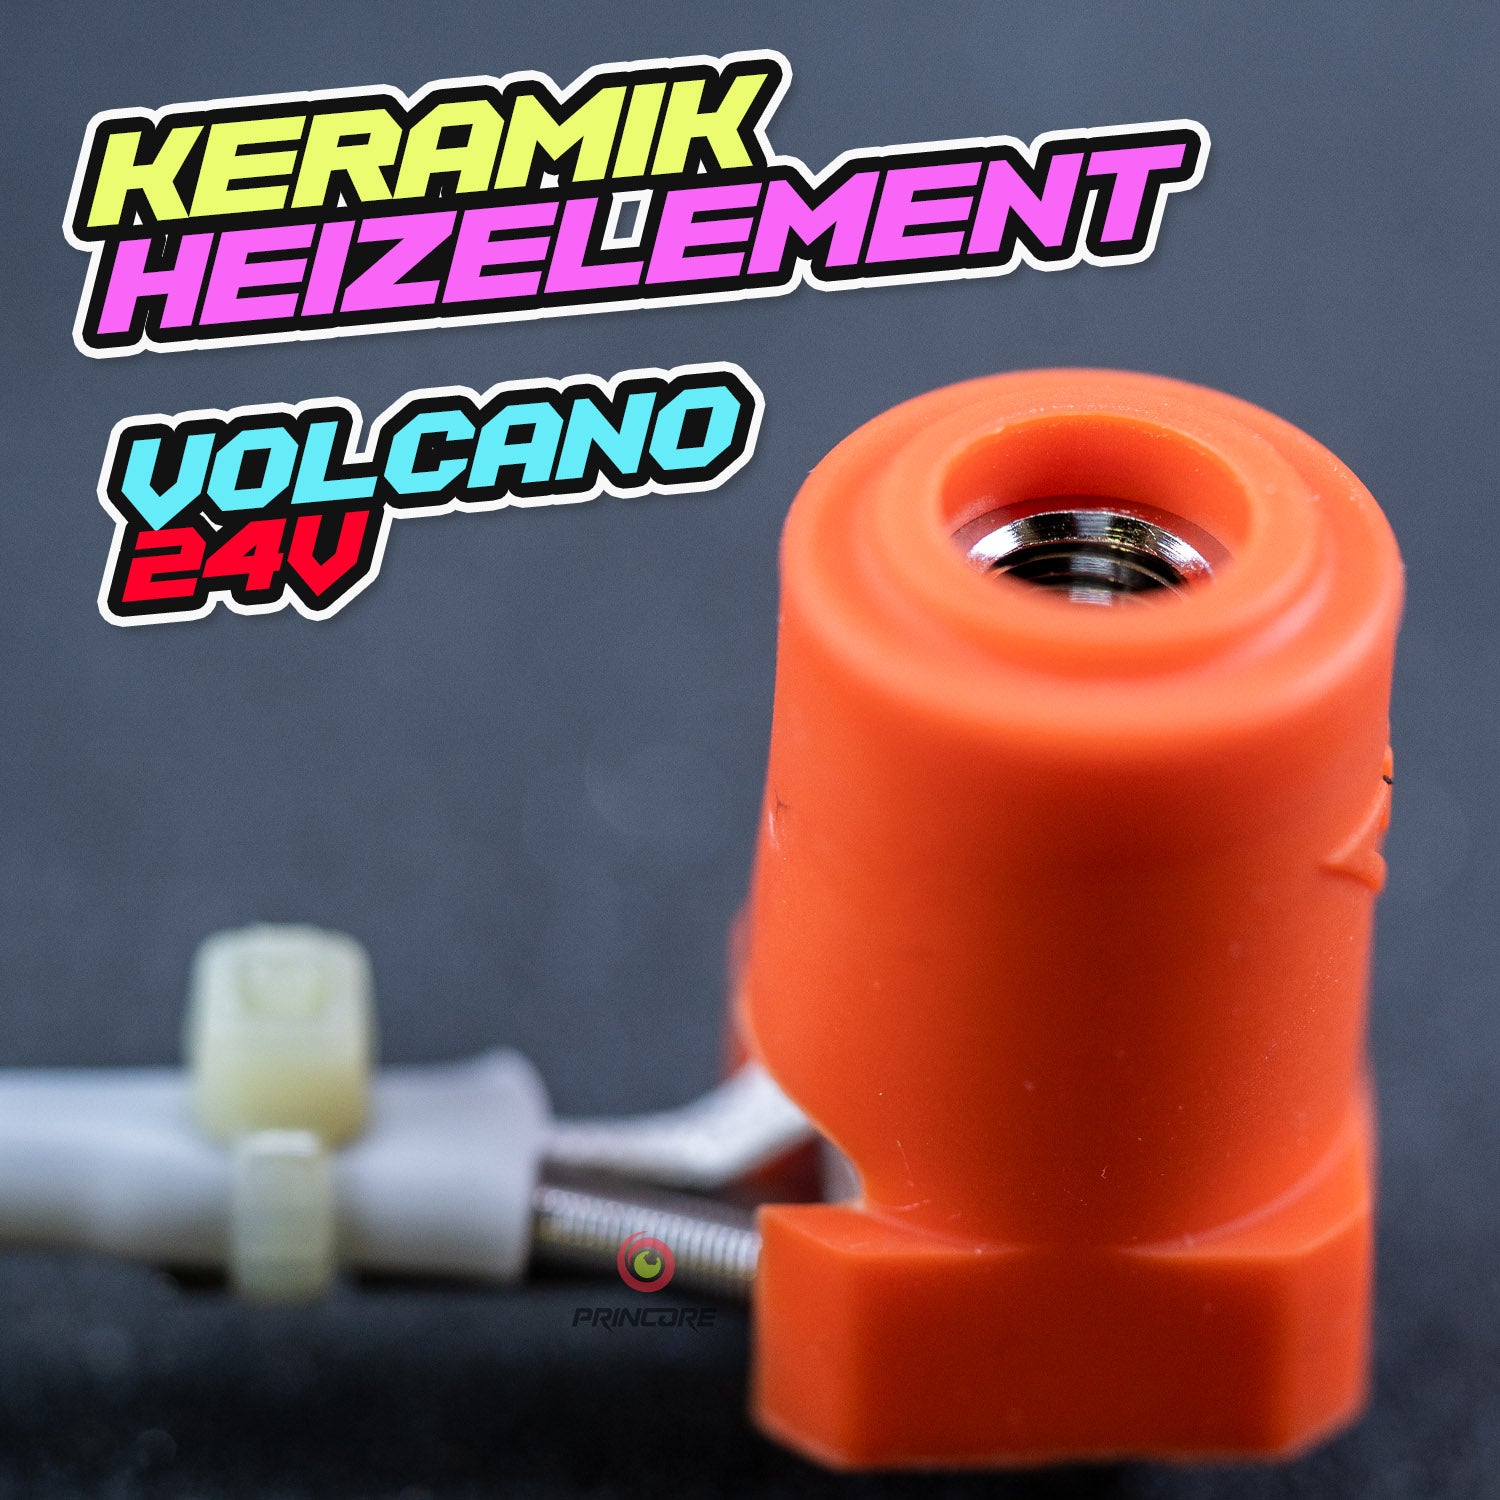 Keramik Heizelement [Volcano] 24V